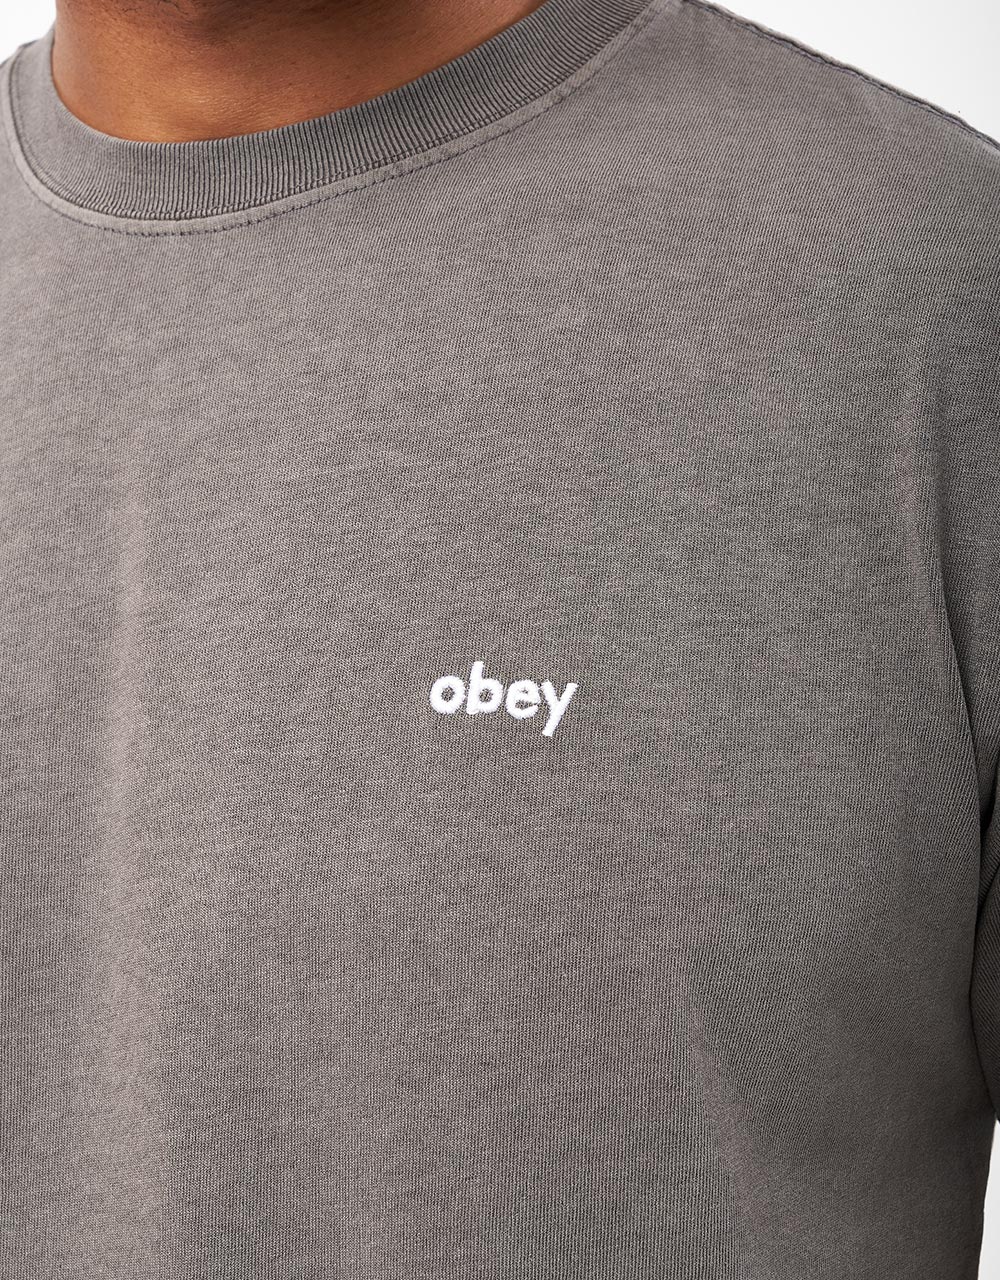 Obey Lowercase Pigment T-Shirt - Pigment Digital Black